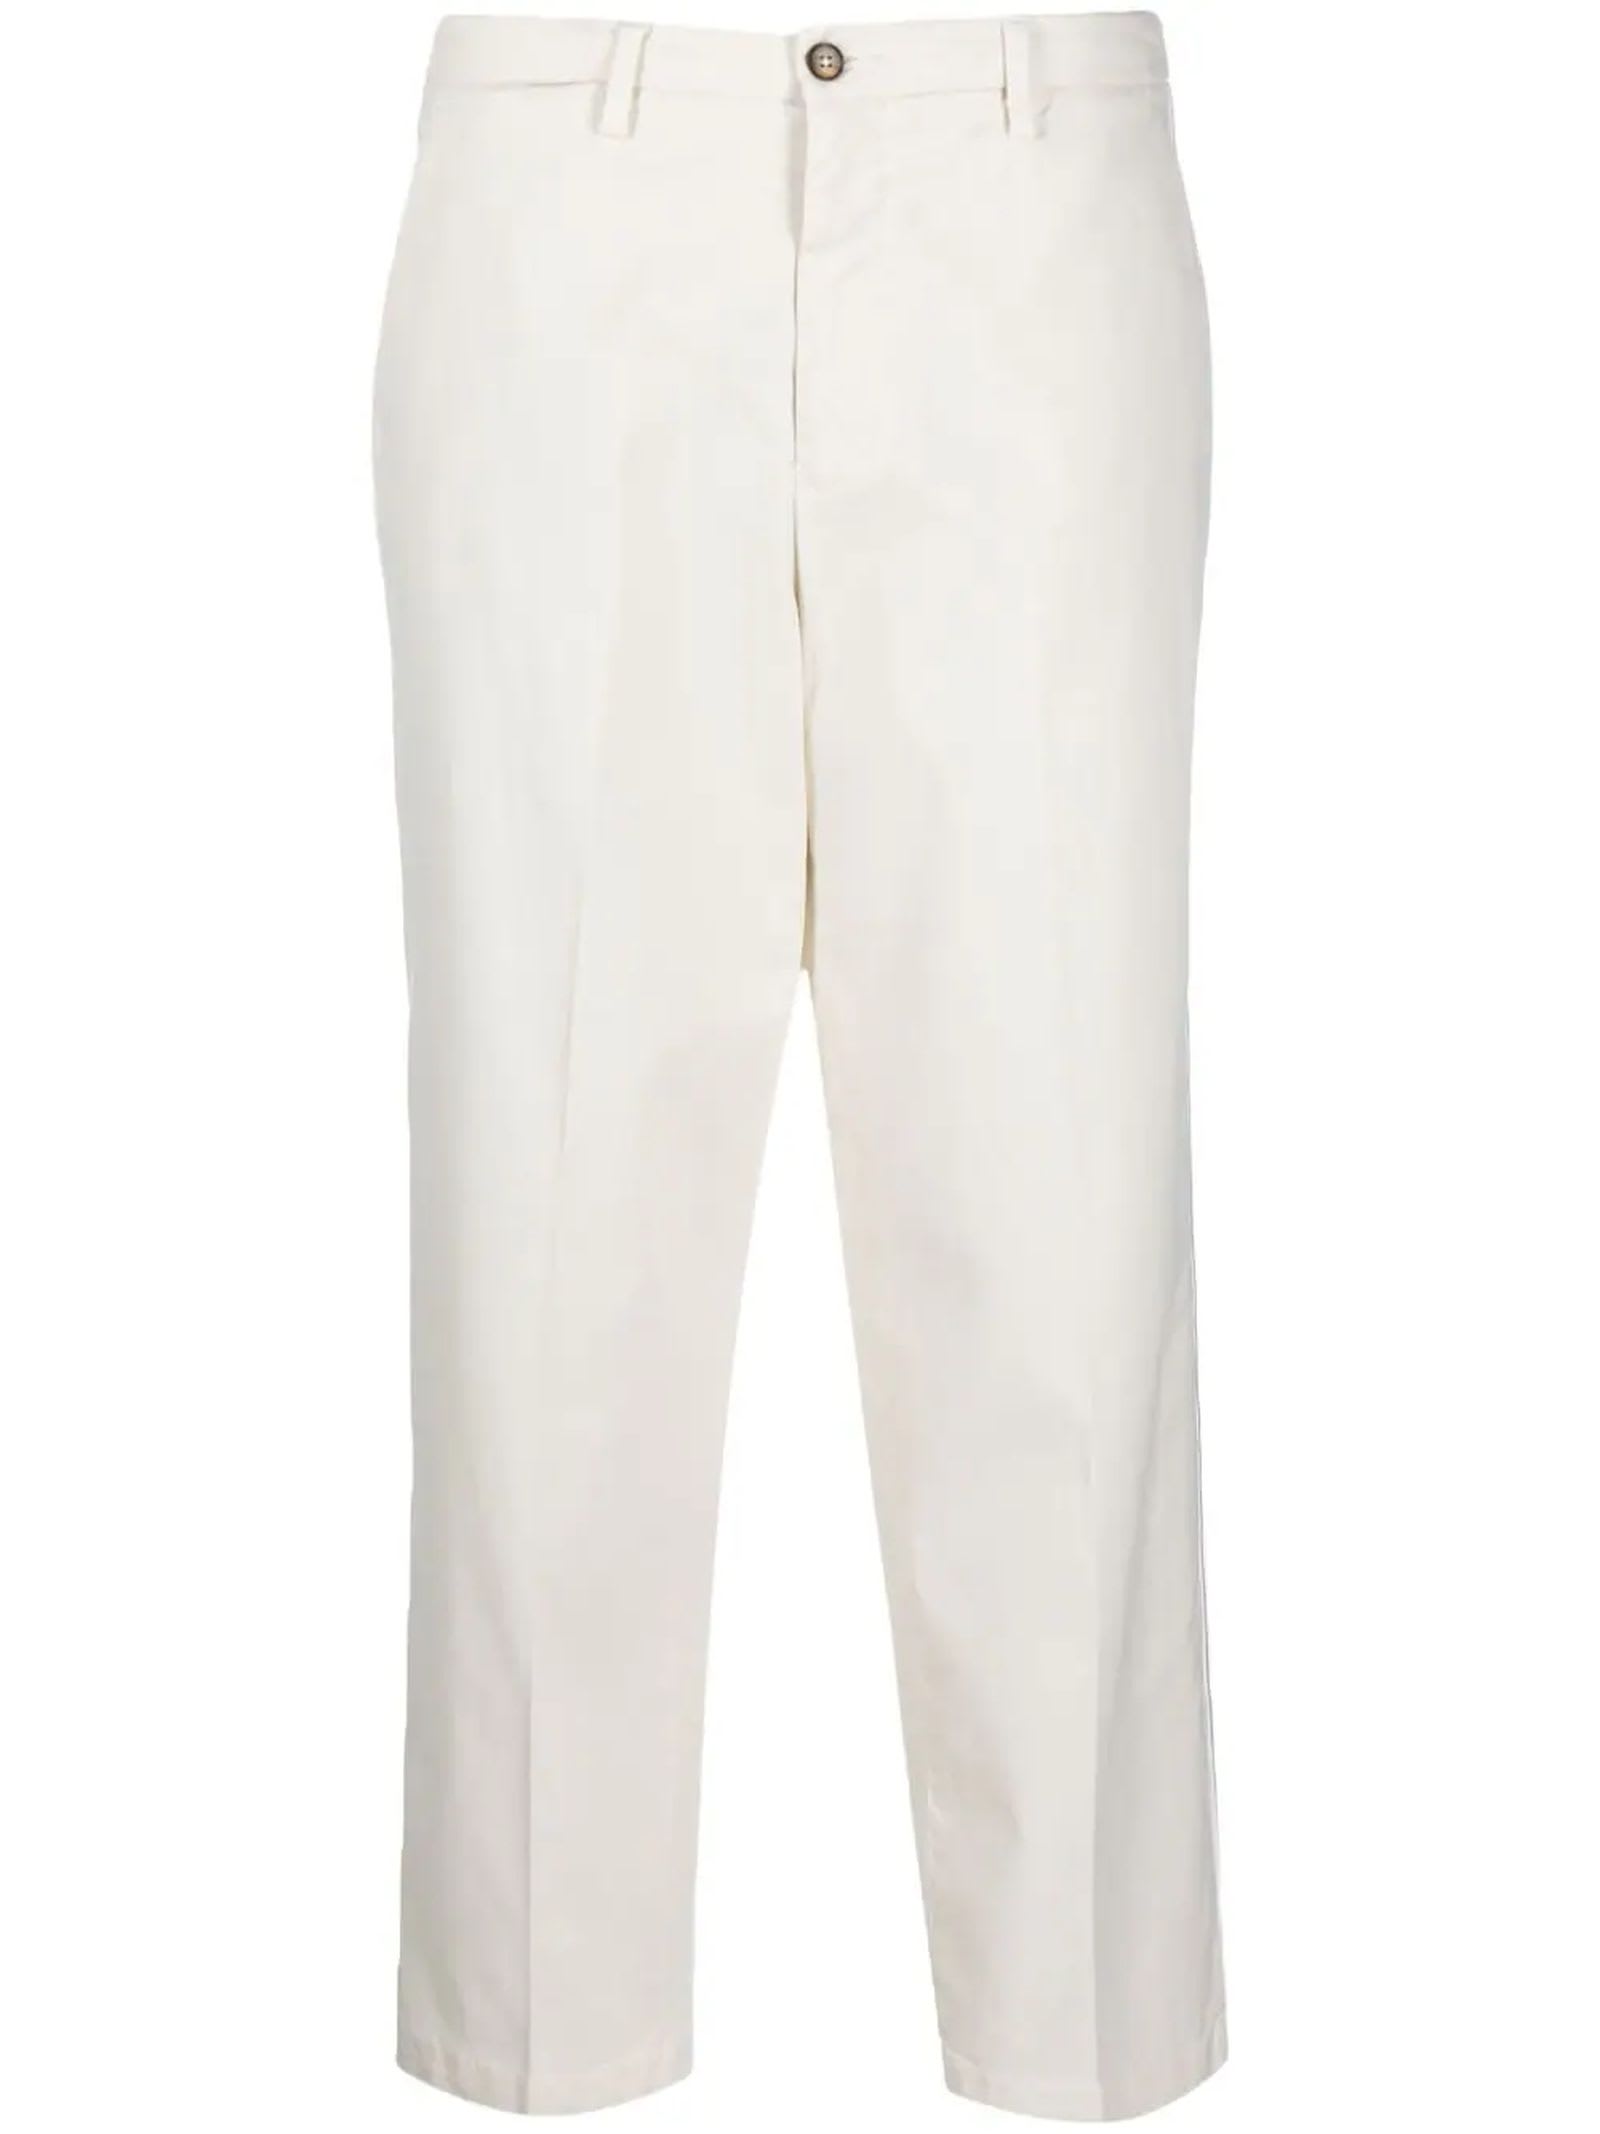 1949 Light Beige Cotton Blend Trousers